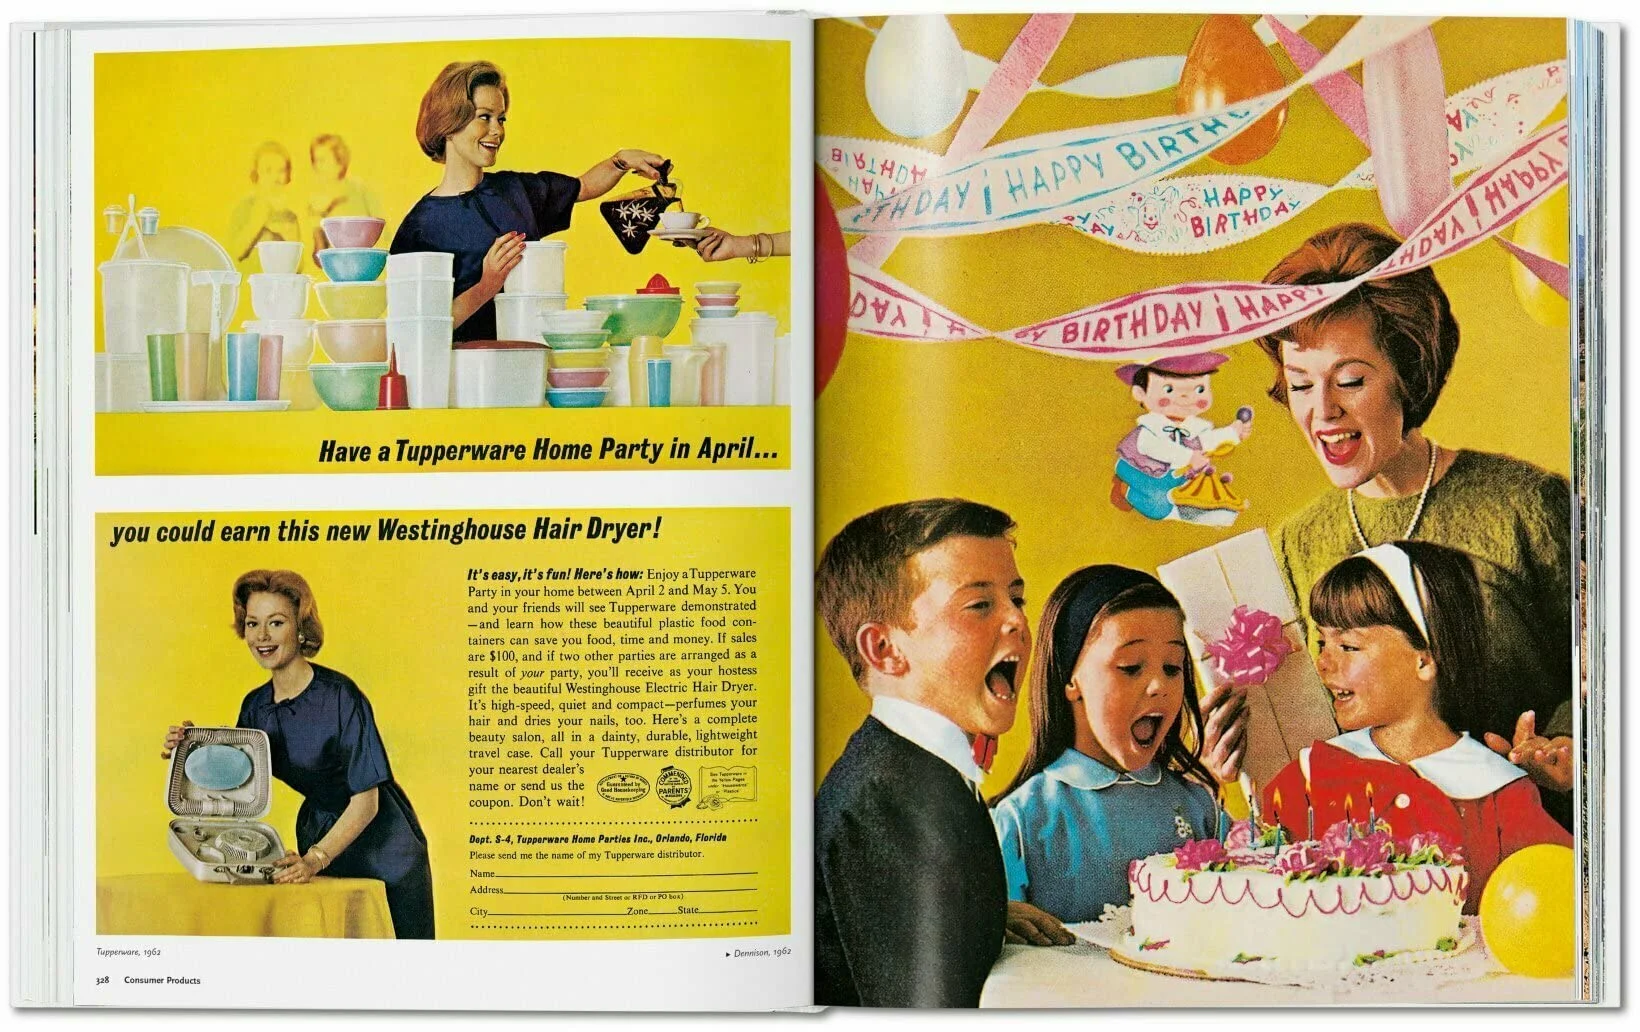 "All American Ads of the 60s" "Вся американская реклама 60-х годов "